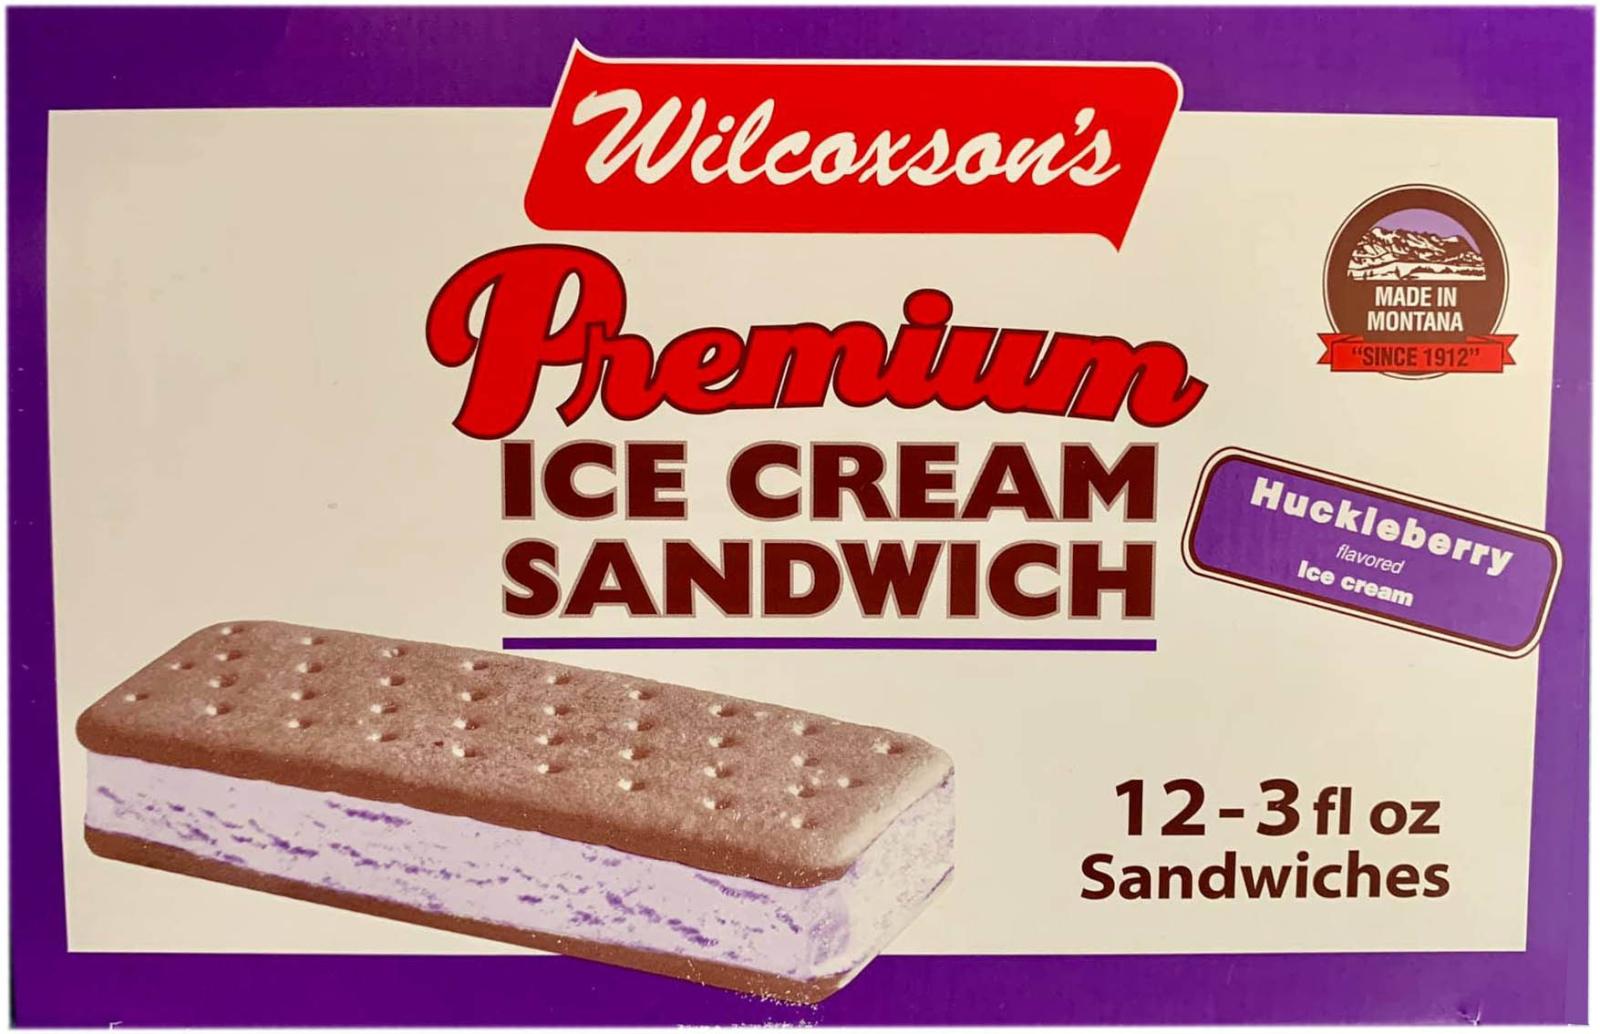 Wilcoxson's Ice Cream Sandwich Huckleberry